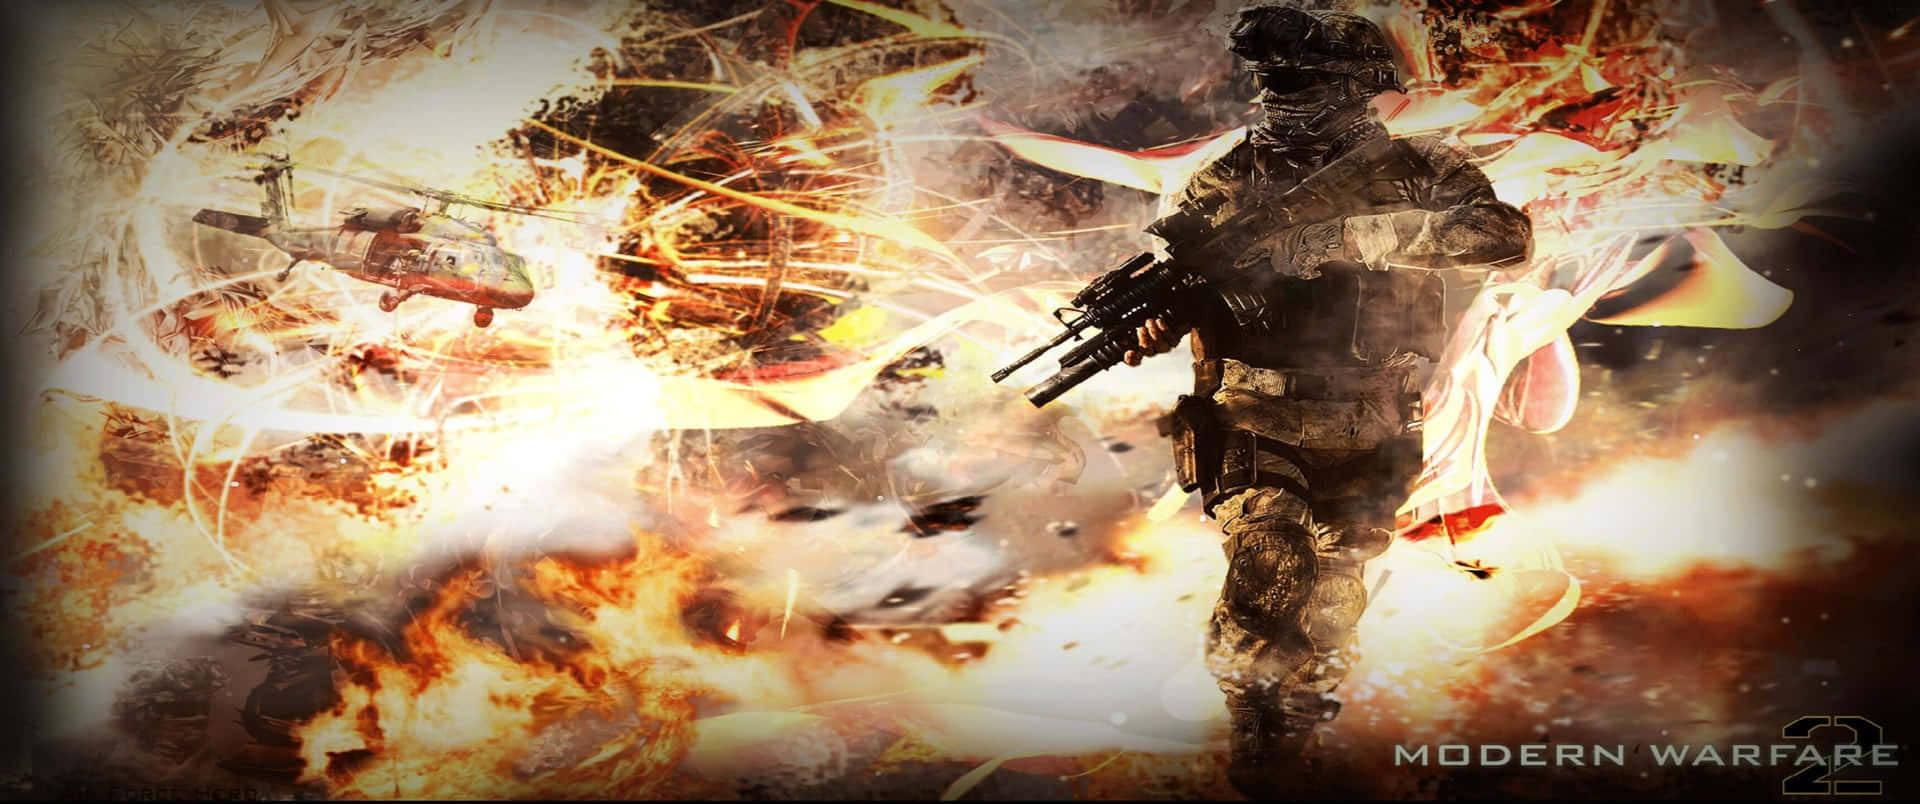 Storexplosion 3440x1440p Call Of Duty Modern Warfare Bakgrundsbild.